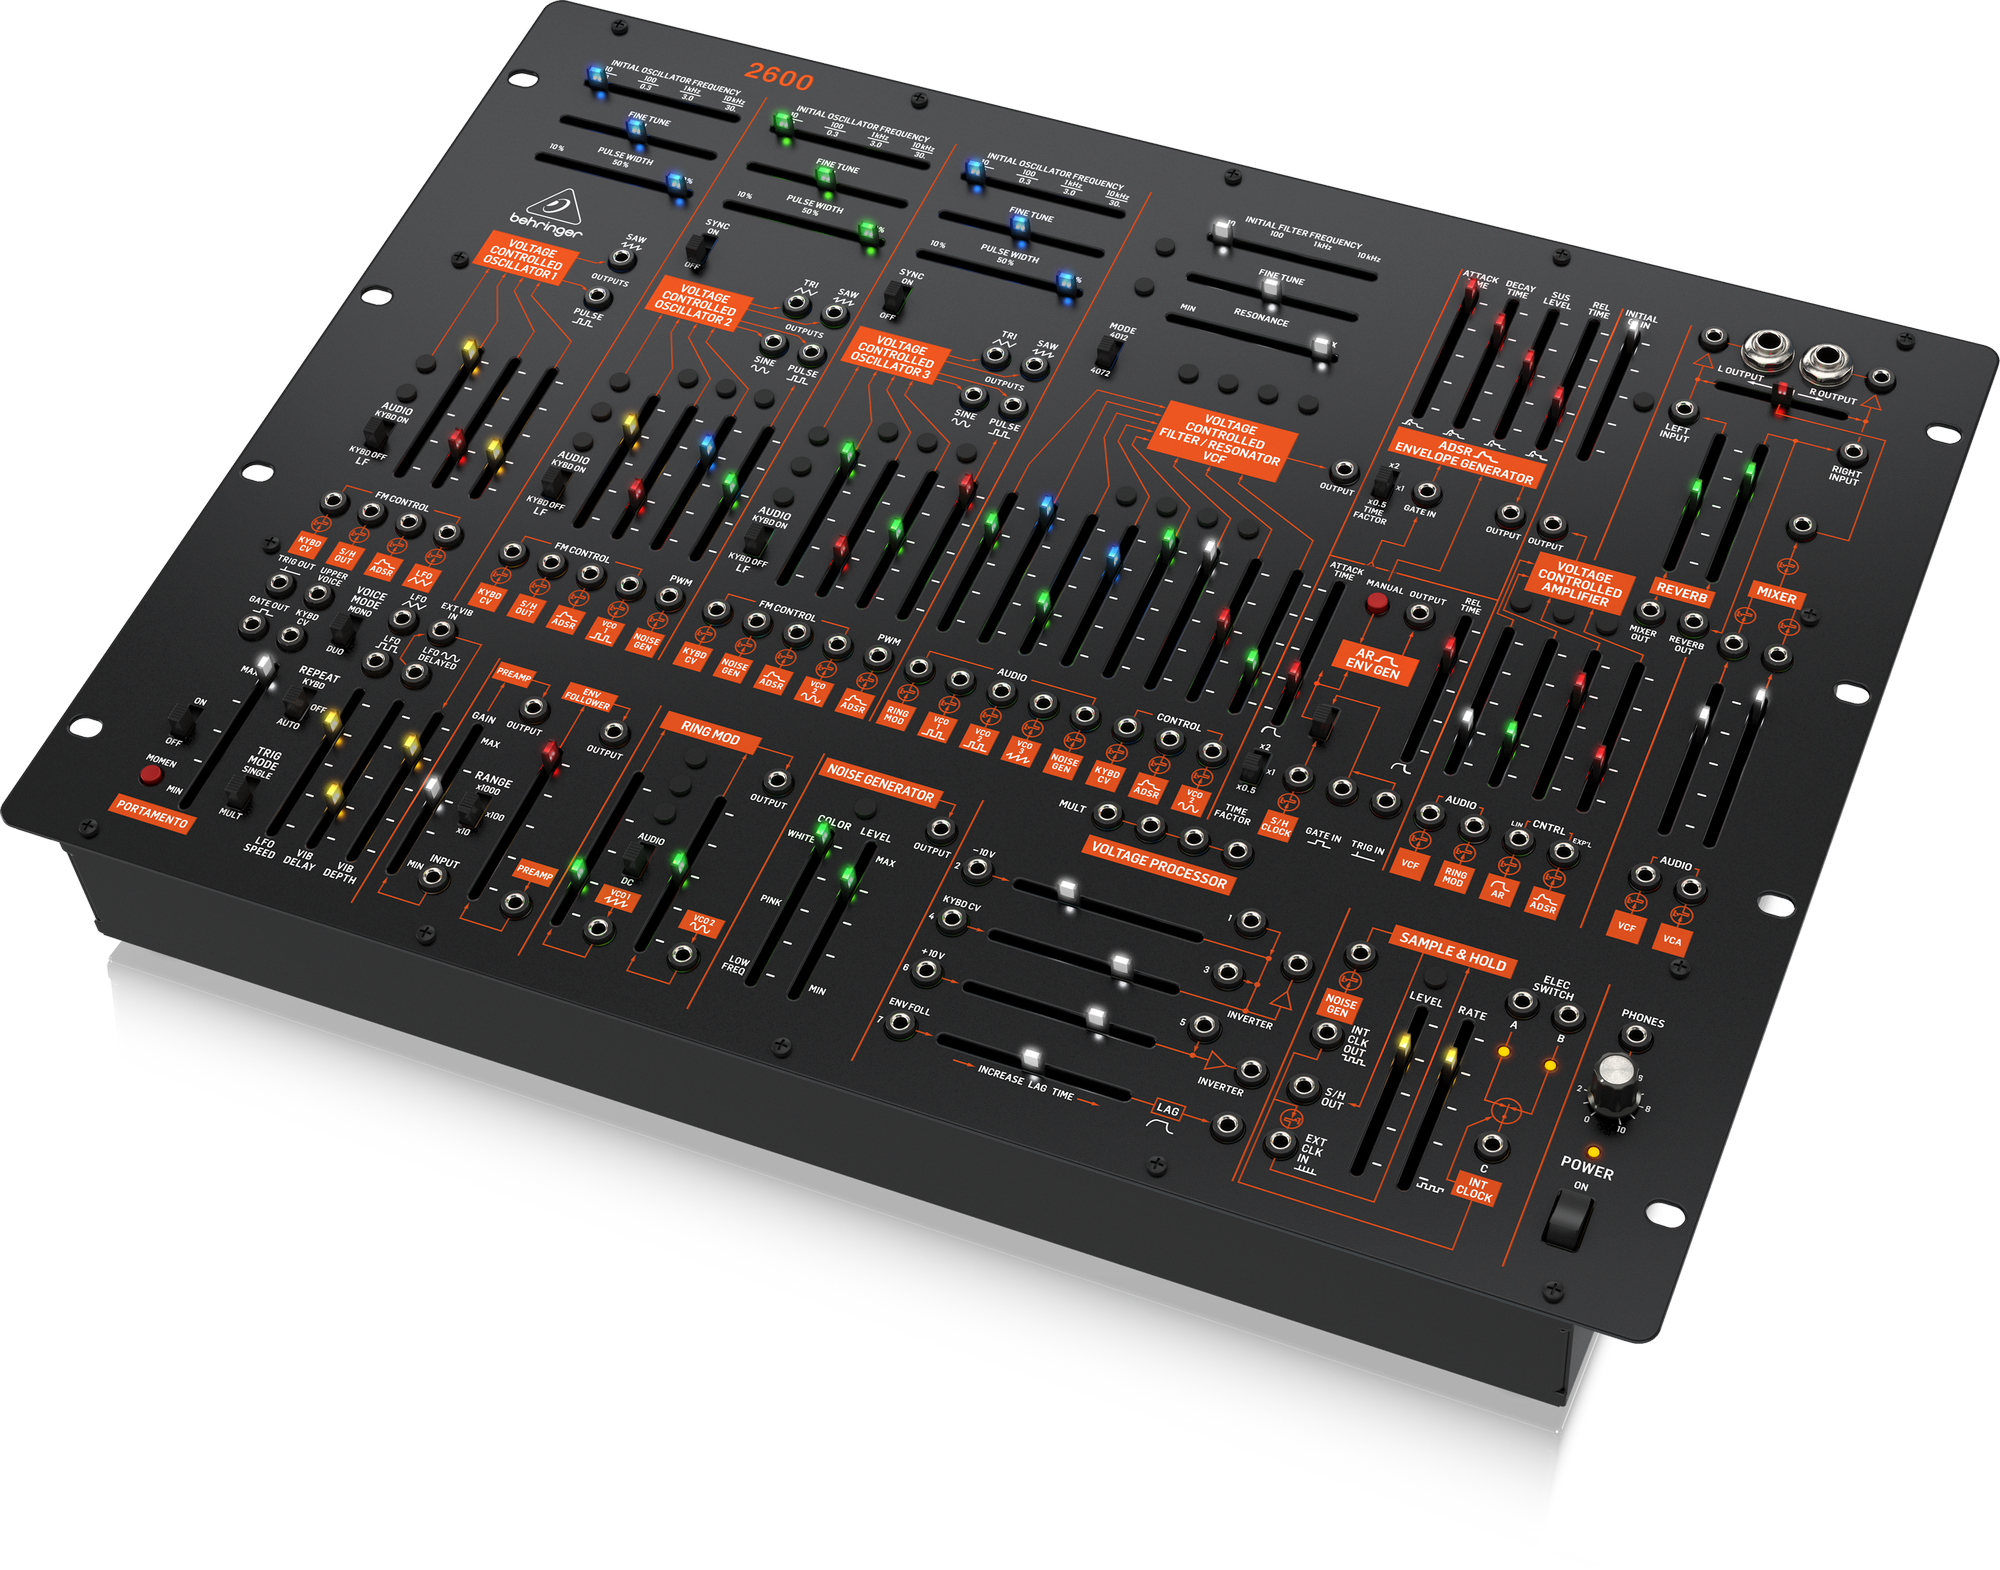 Behringer 2600 Analog Semi-modular Synthesizer | BEHRINGER , Zoso Music